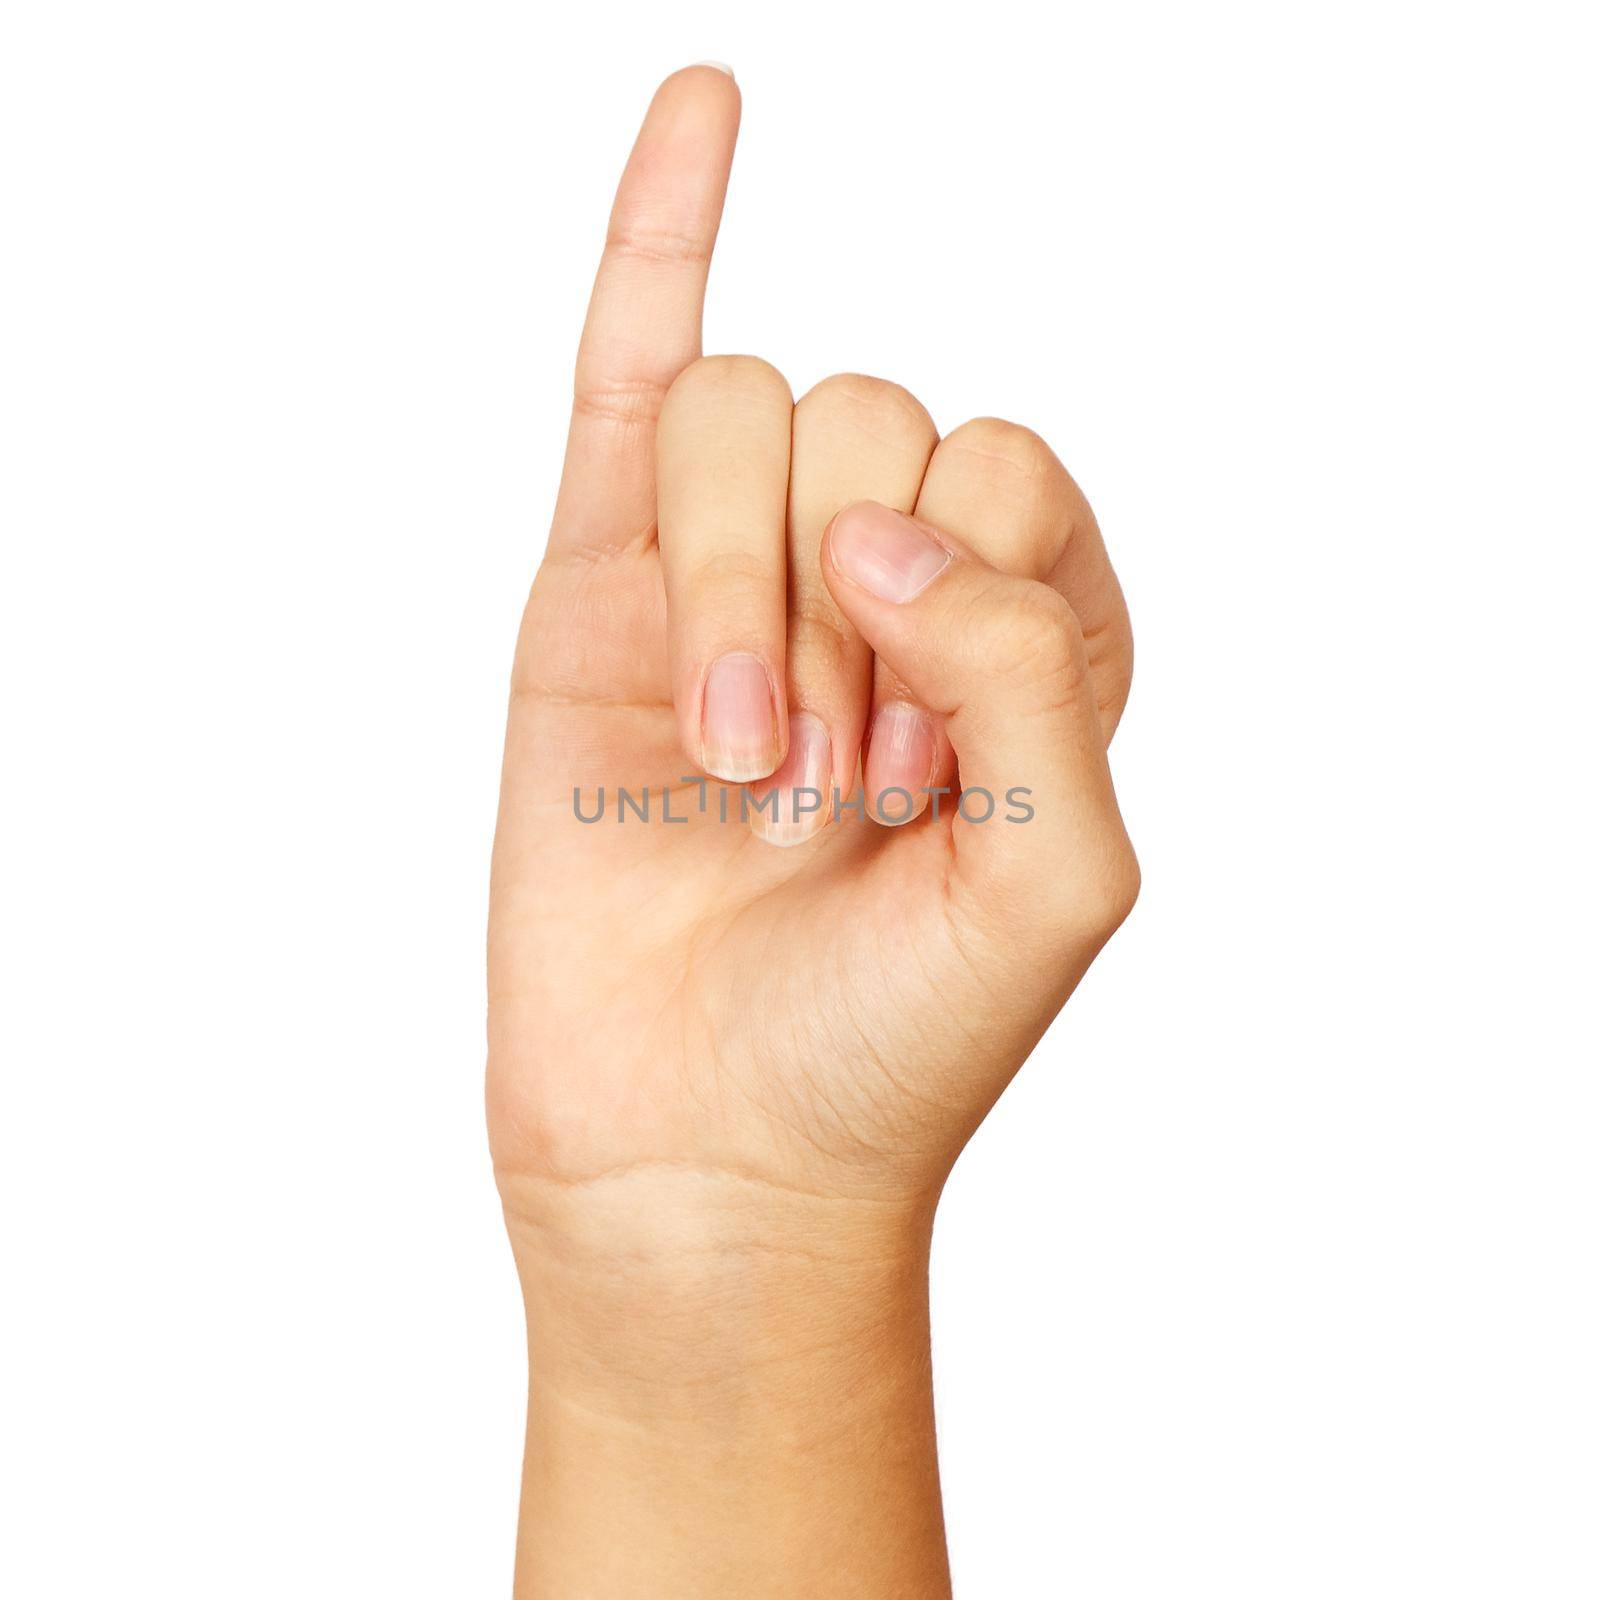 american sign language. female hand showing letter i by raddnatt